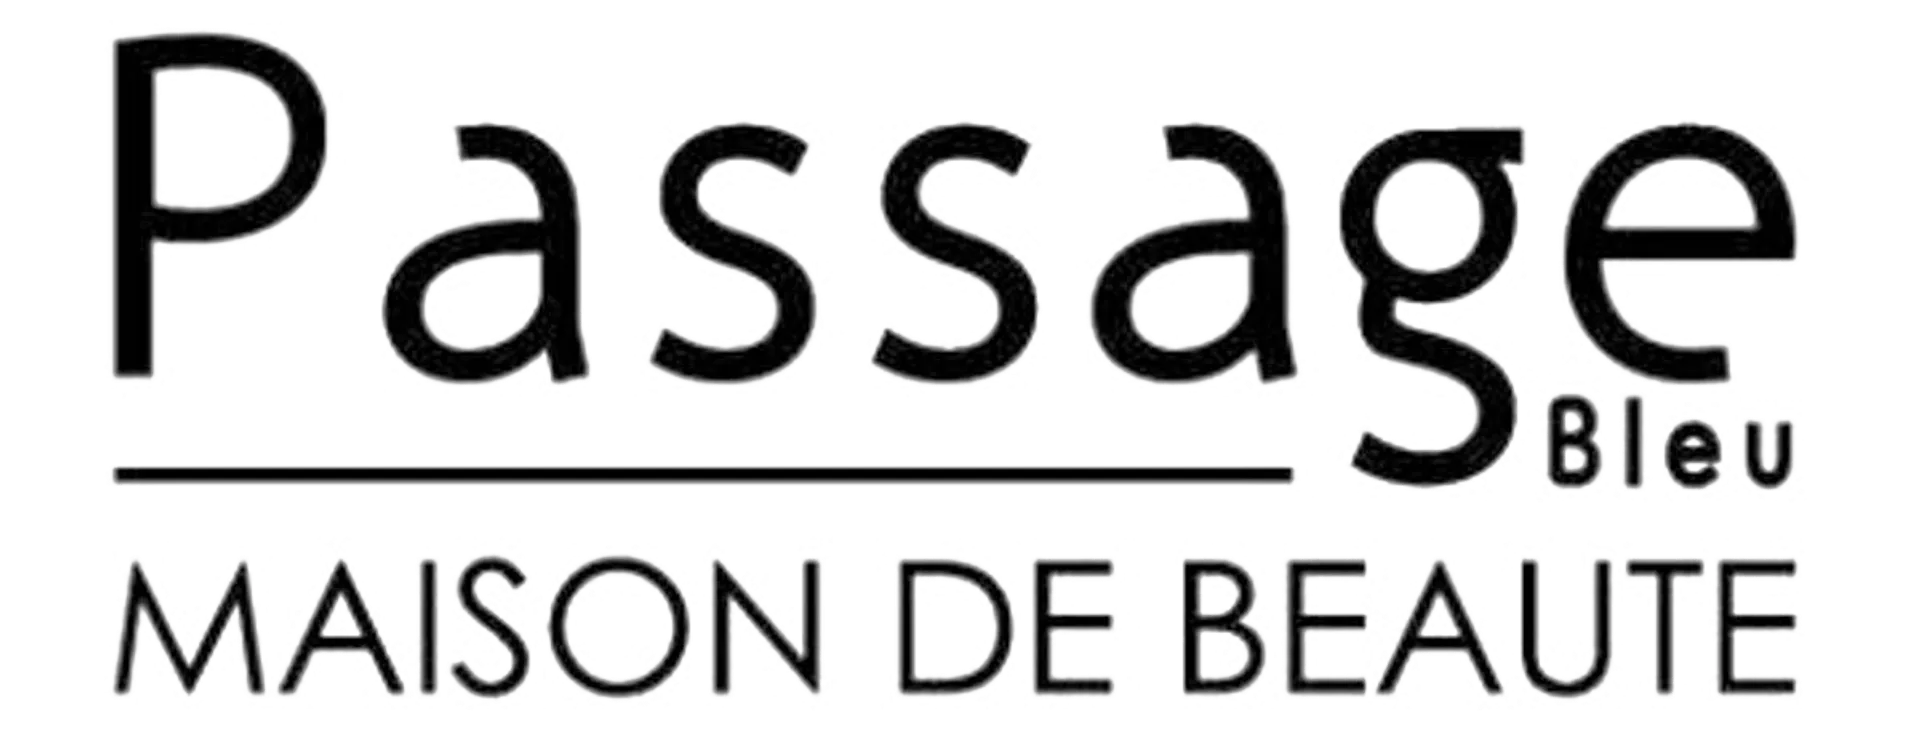 PASSAGE BLEU logo du catalogue